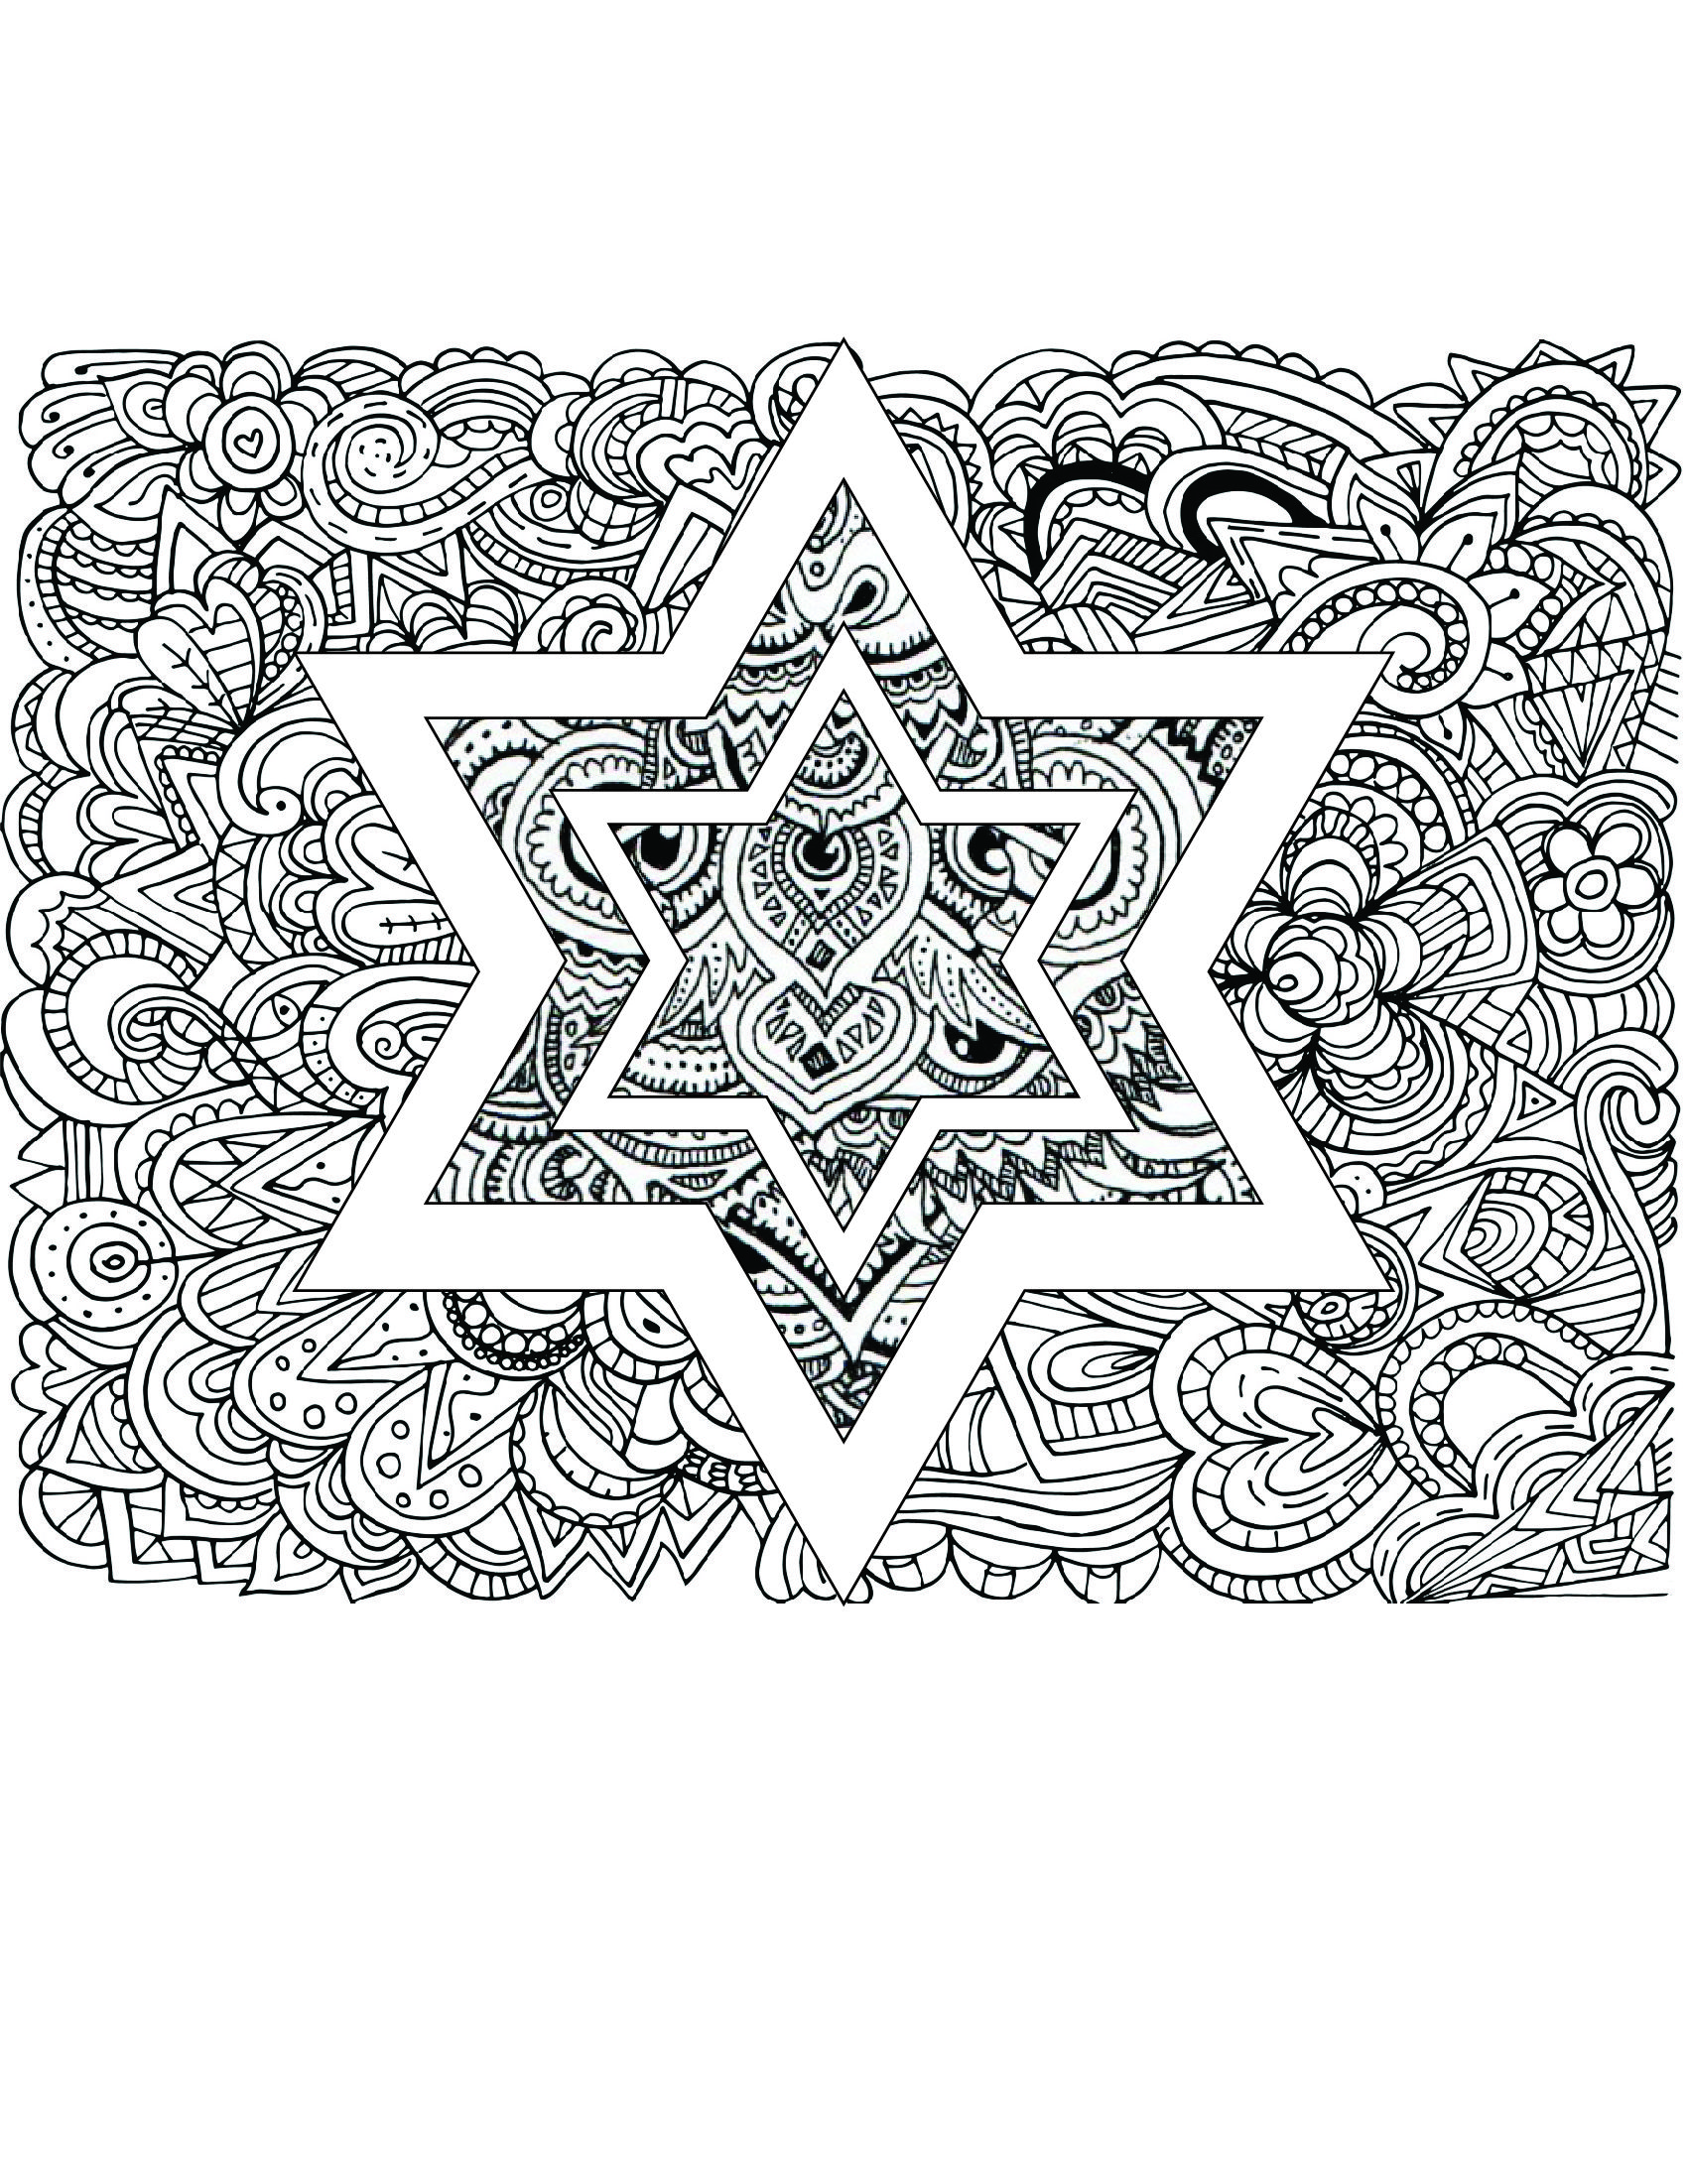 Jewish star of david magen david judaic holiday coloring page detailed coloring pages coloring pages coloring sheets